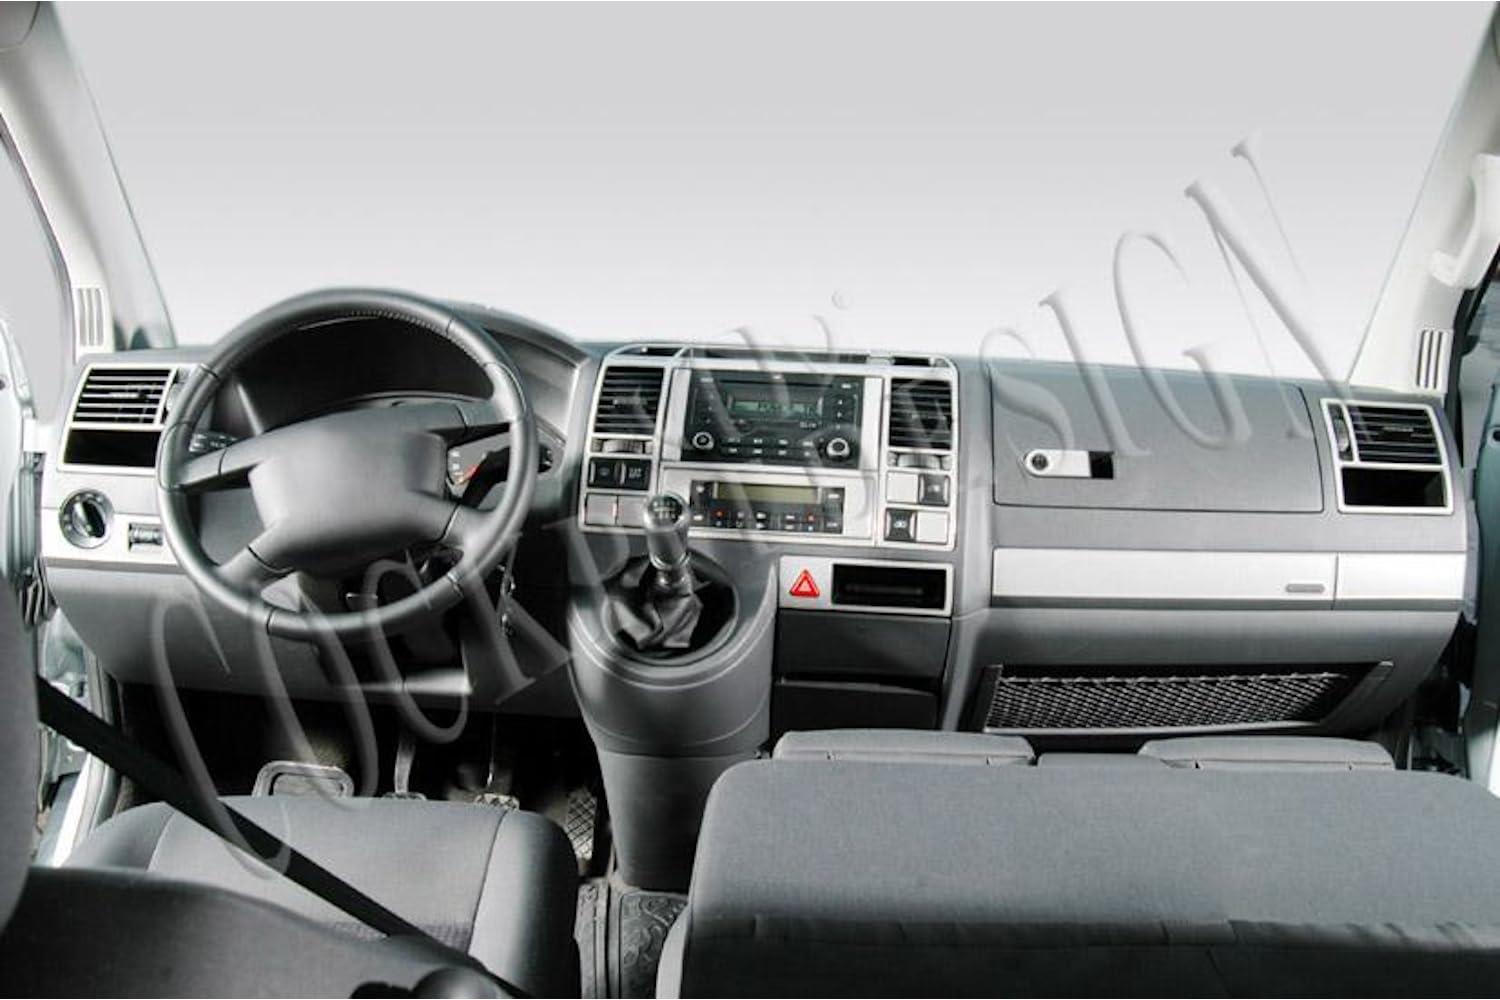 AUTOKLEIDUNG® Cockpit Dekor kompatibel mit Volkswagen Transporter/Carevelle T5 Baujahr 08/2003-08/2009 31 Teile | 3D Aluminium Optik von Autokleidung